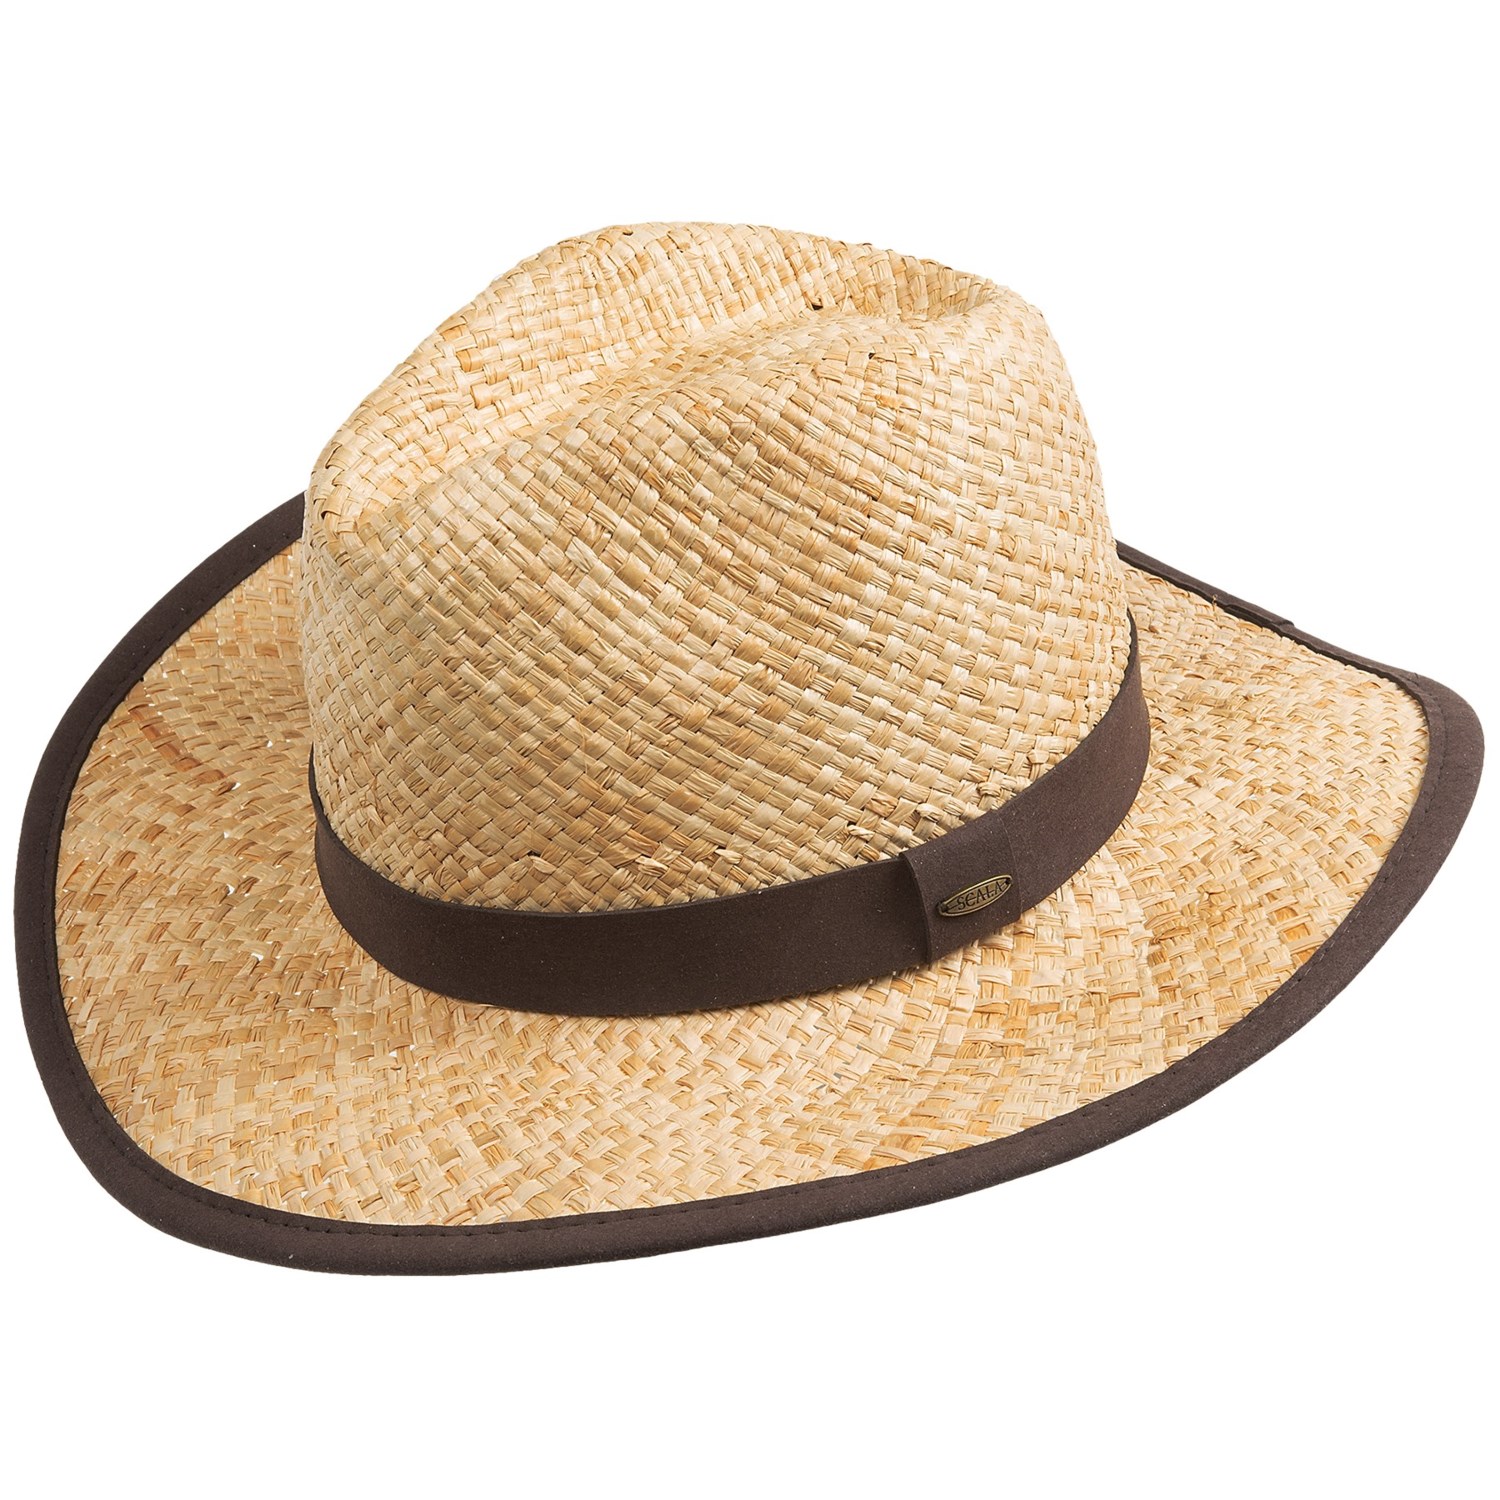 Scala Raffia Safari Hat (For Men and Women) 7200X Save 42%